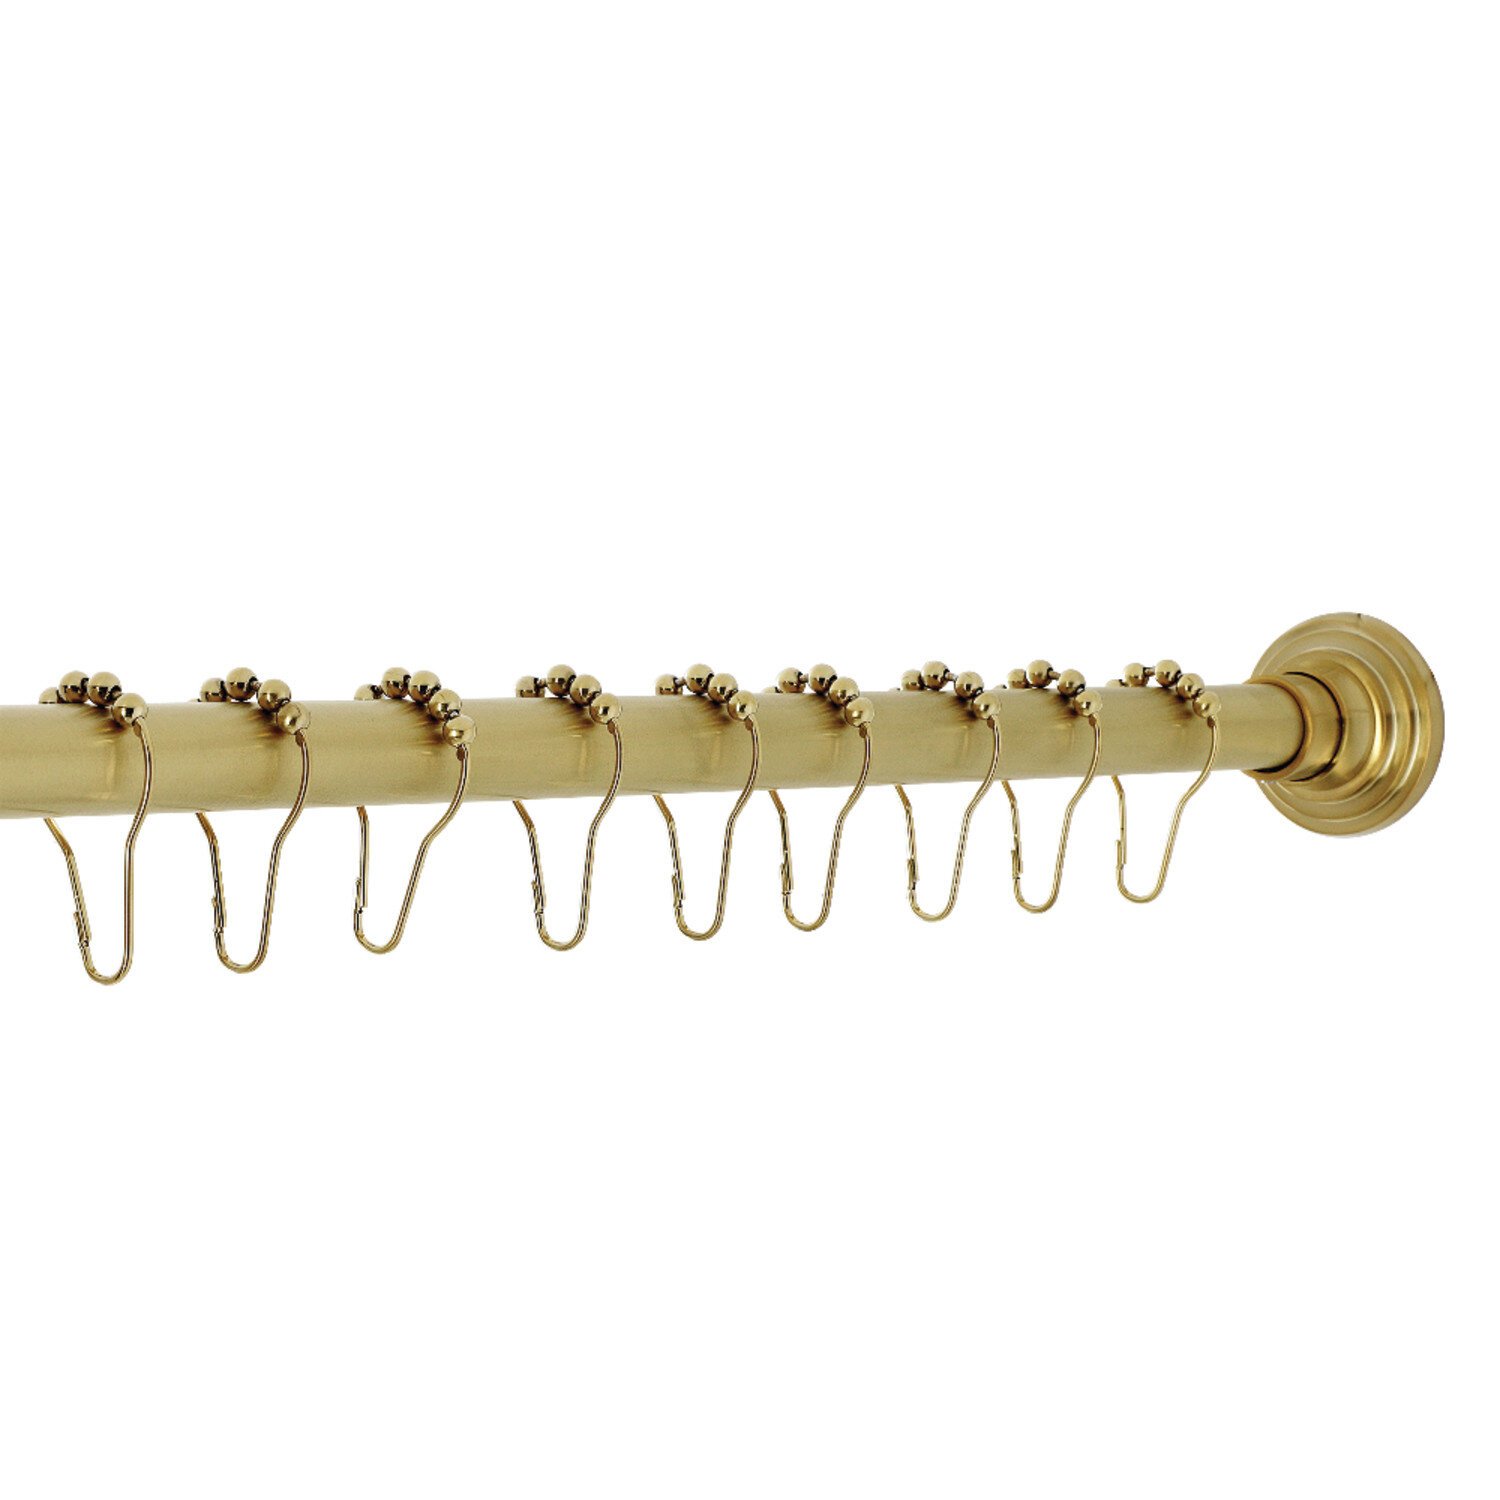 Kingston Brass Srk607 72 In. Edenscape Adjustable Shower Curtain Rod With Rings, Brushed Brass Multicolor